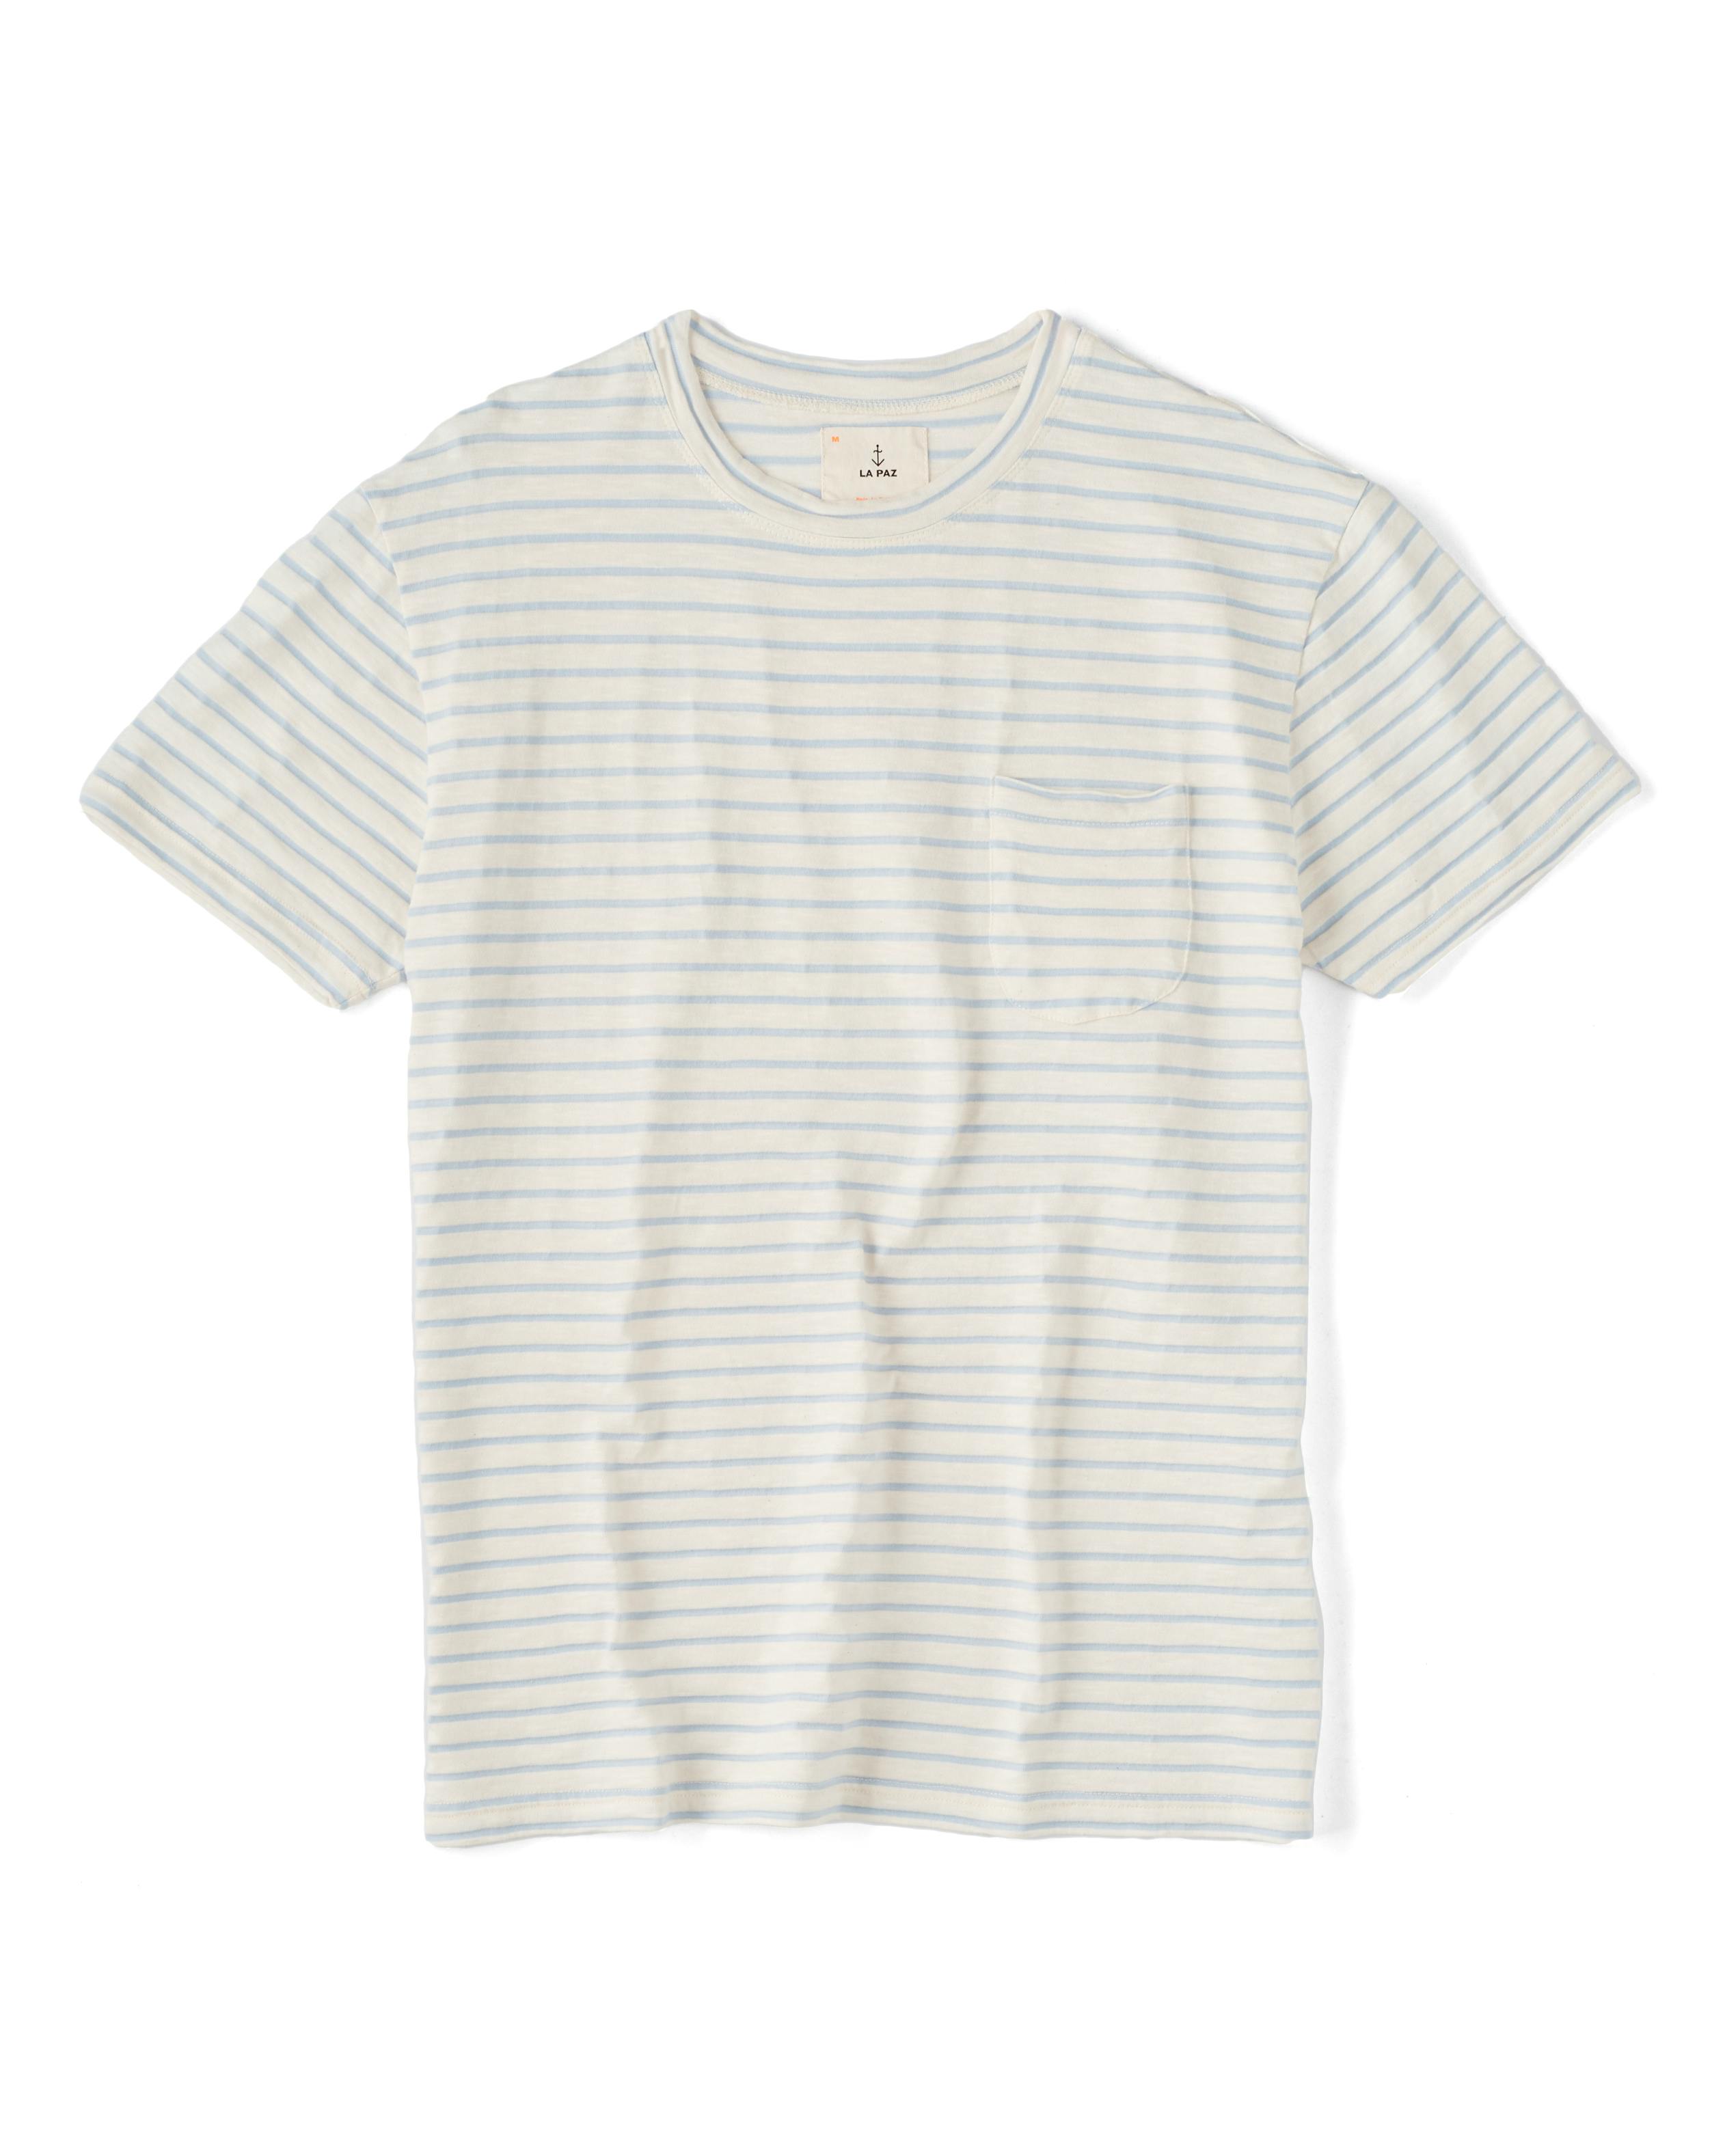 LA PAZ - Guerreiro T-Shirt in Heather Stripes - $80